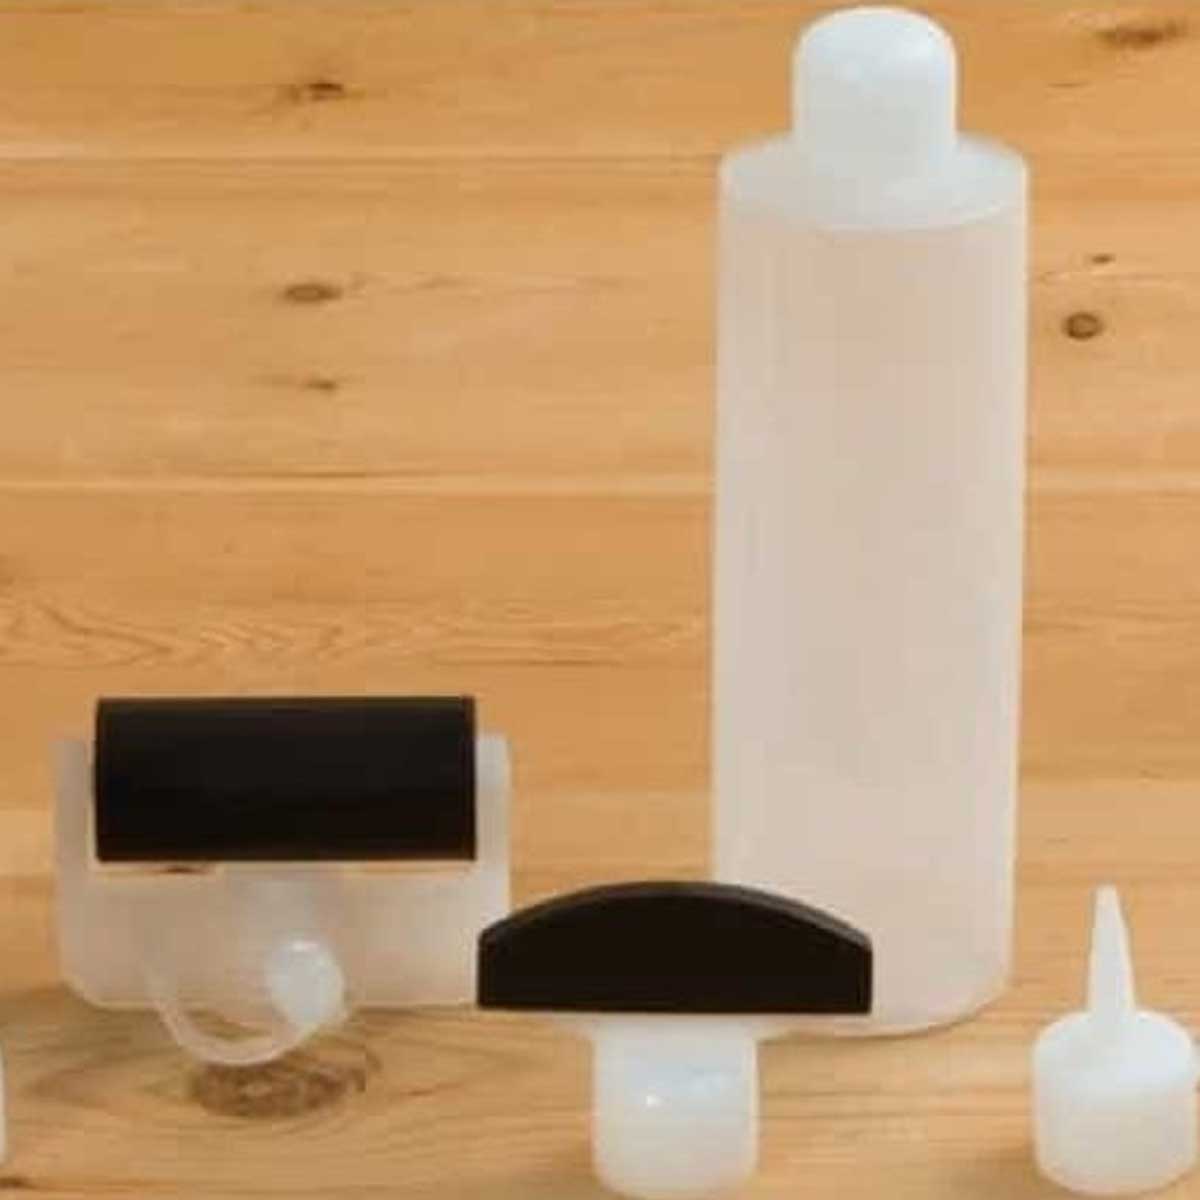 Glue Bottle Applicator Set Manufacturers, Suppliers in Chennai